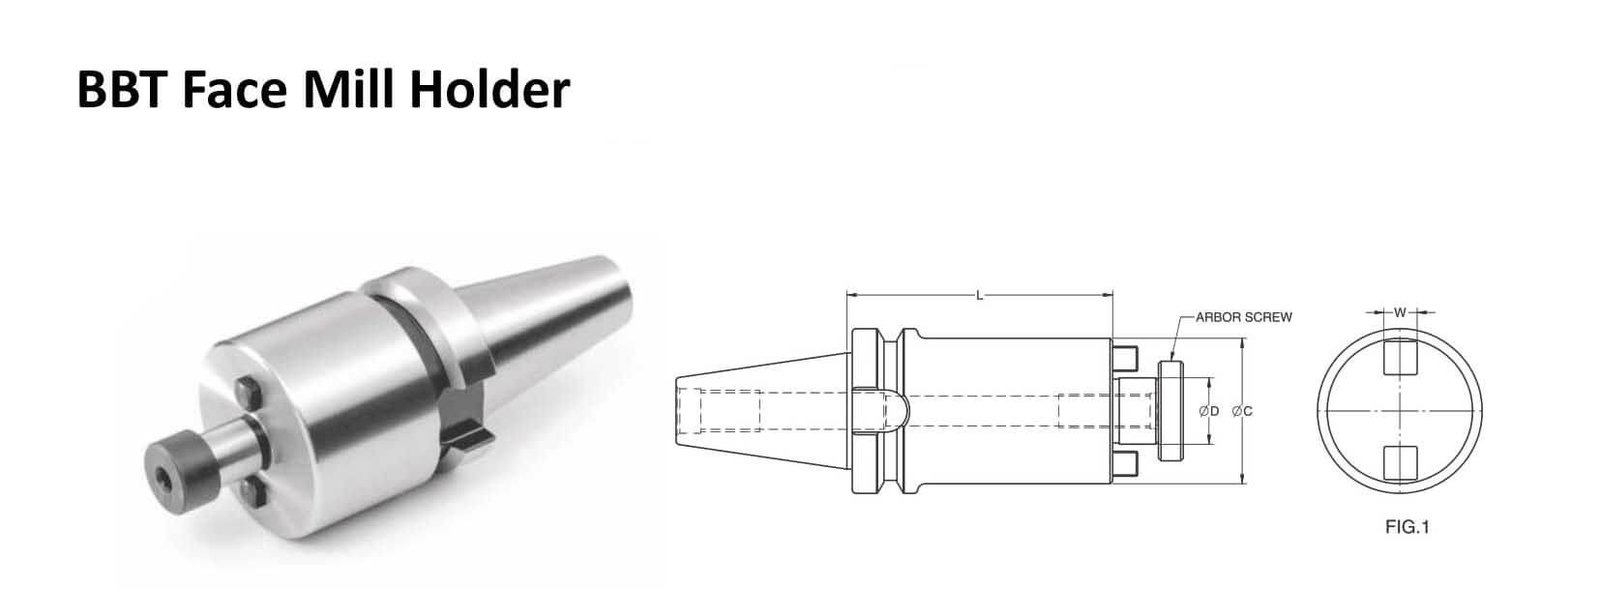 BBT40 FMH 0.750 - 2.00 Face Mill Holder (Balanced to 2.5G 25000 RPM)